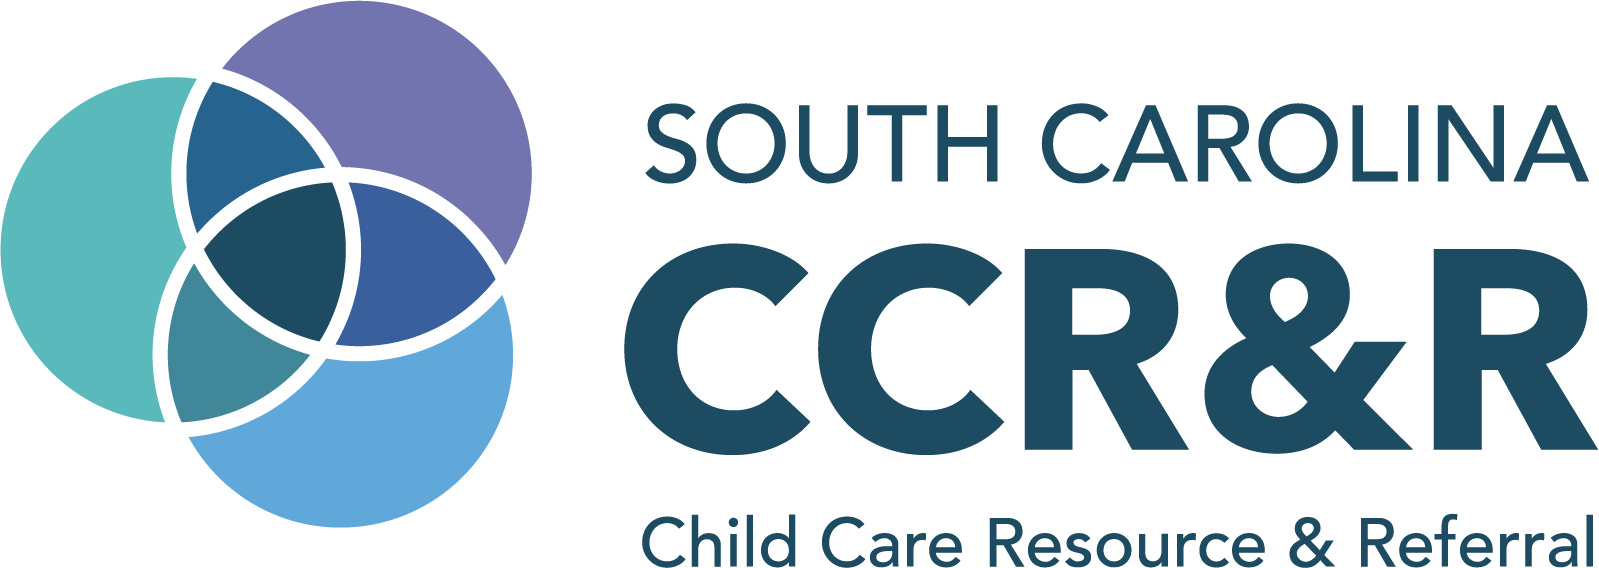 South Carolina Child Care Resource and Referral Logo